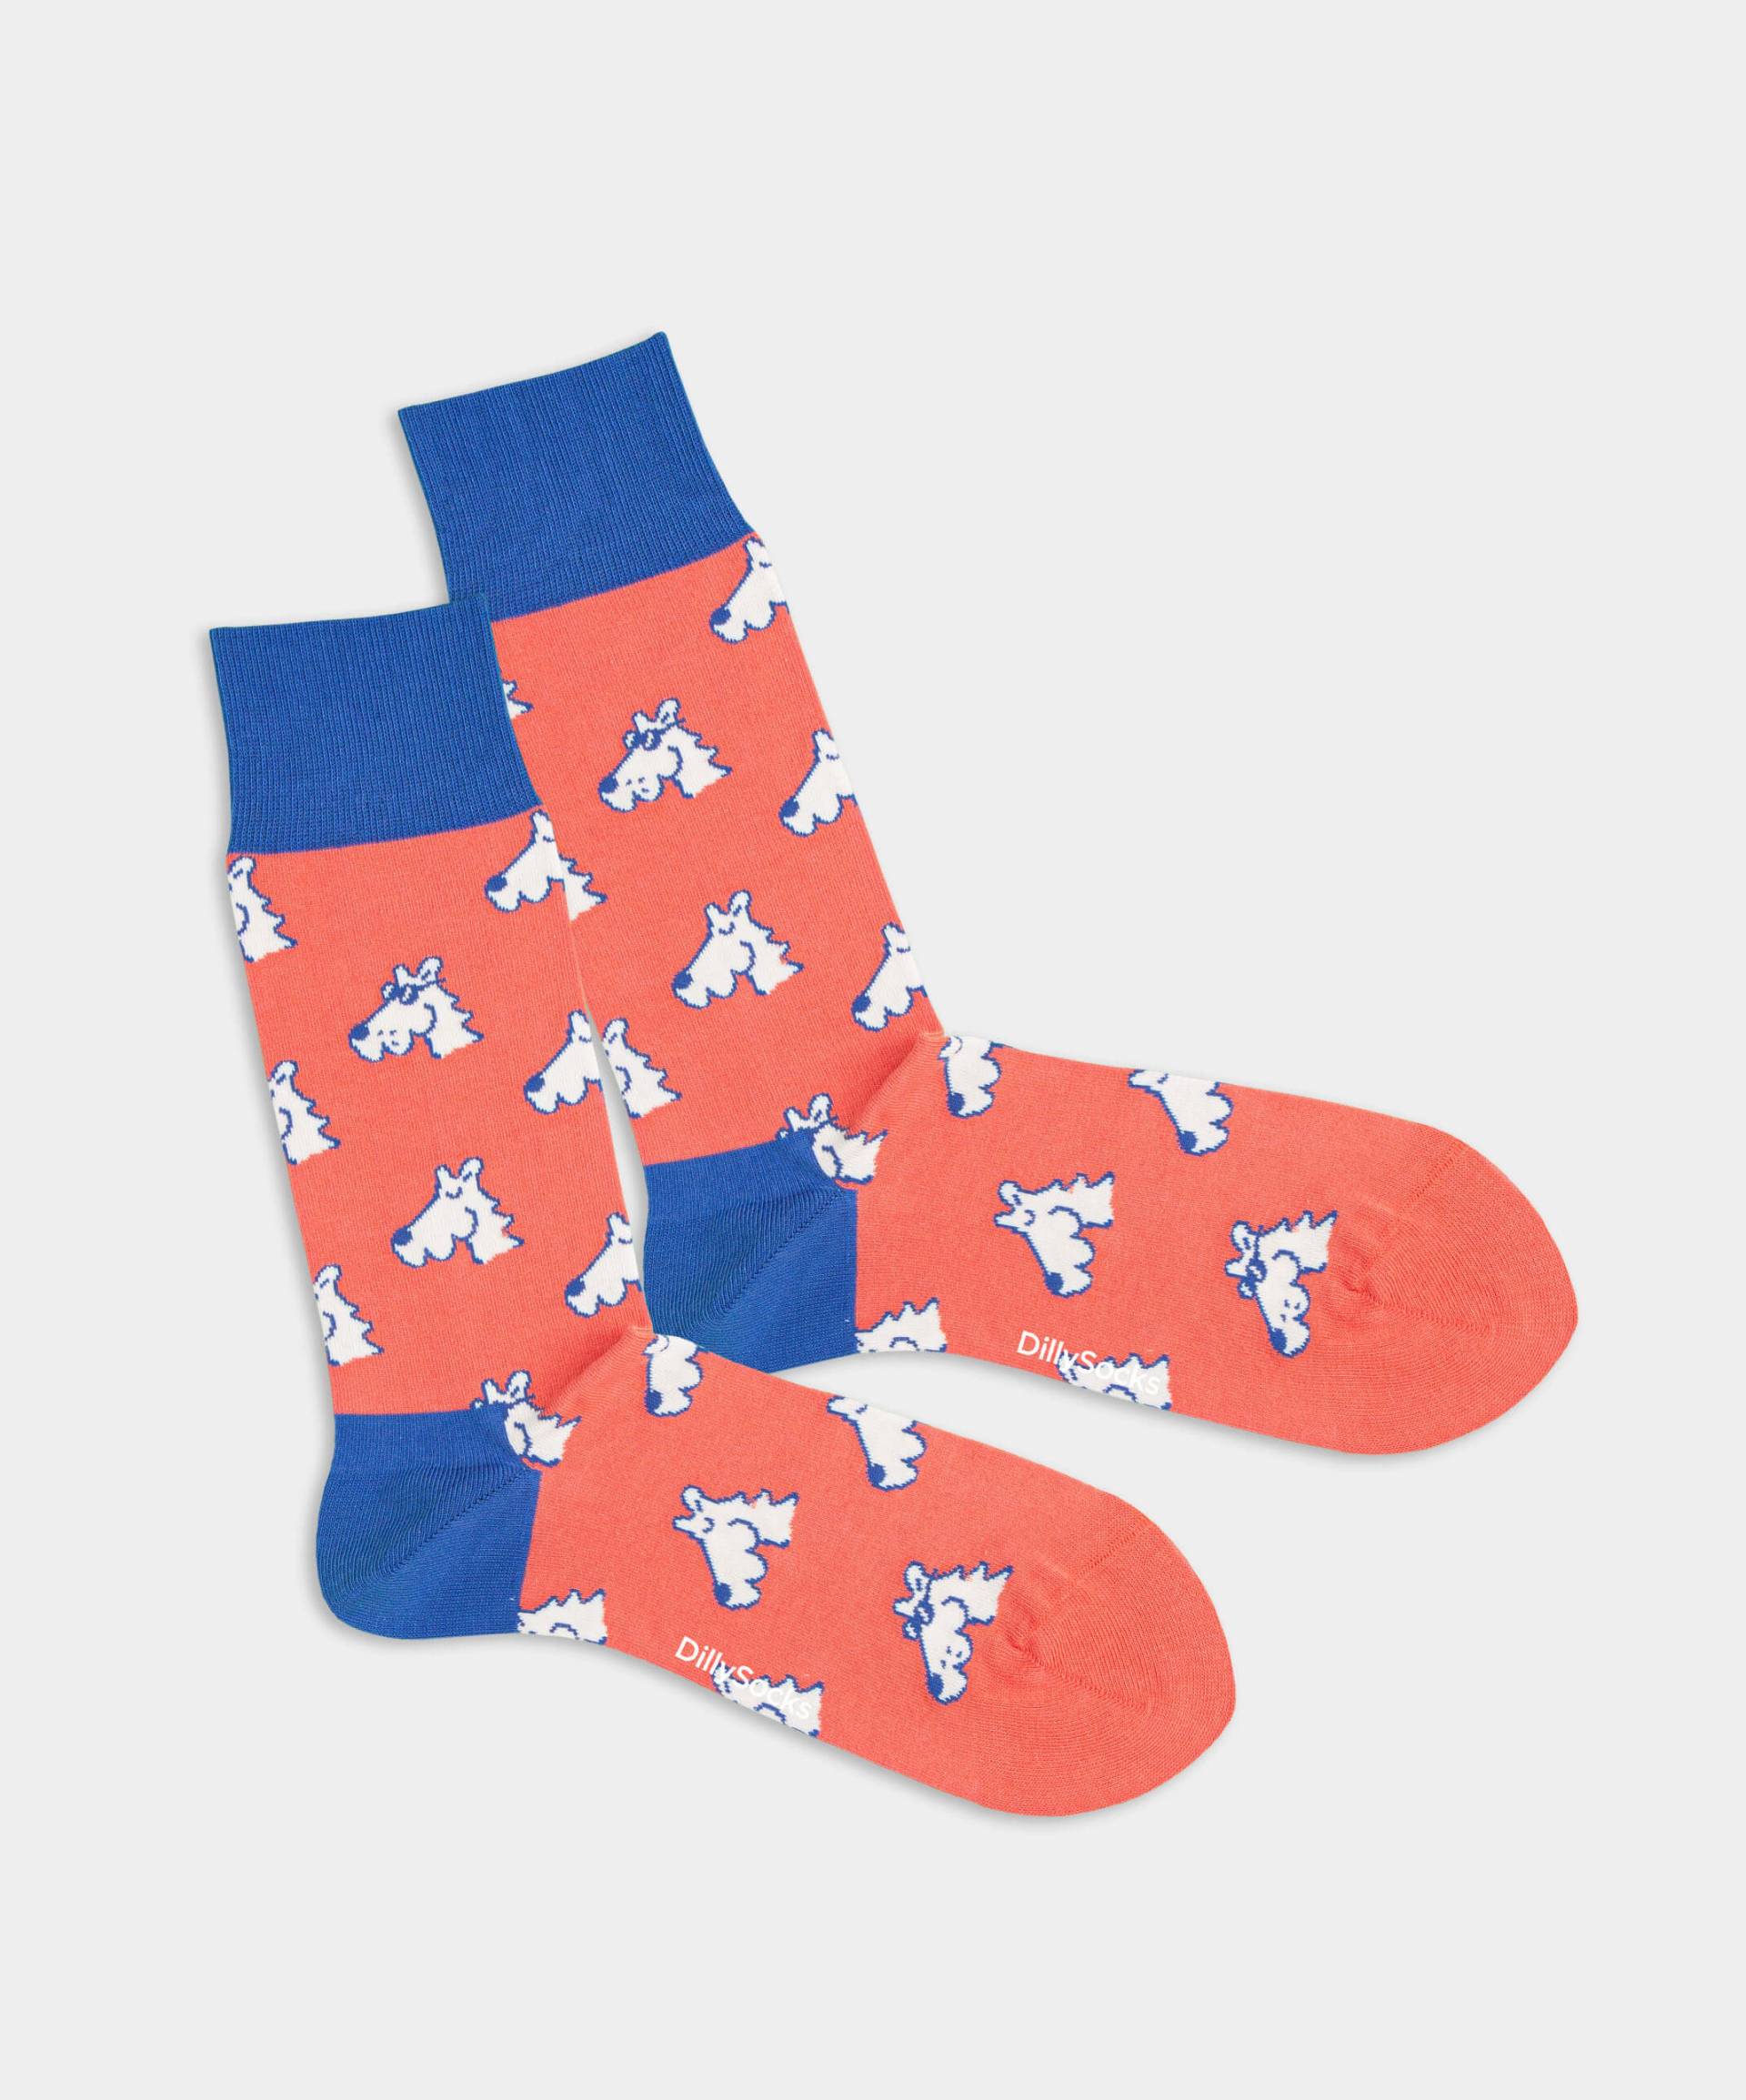 - Socken in Rosa mit Hund Tier Motiv/Muster von DillySocks